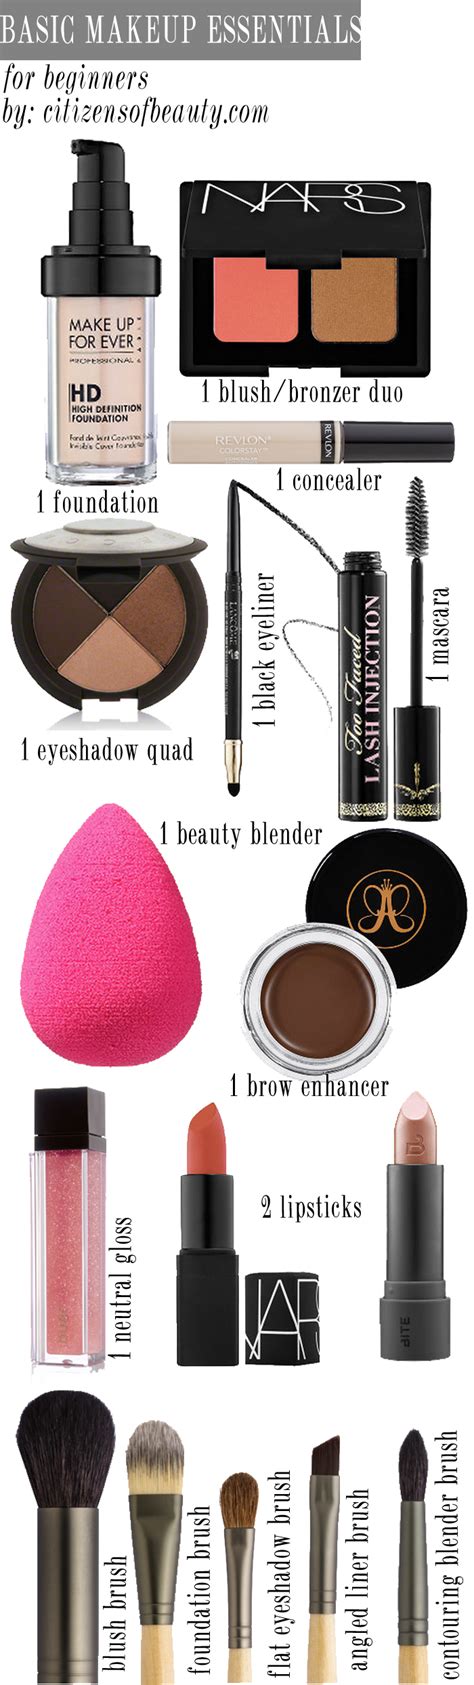 Basic Makeup Essentials for Beginners - Citizens of Beauty